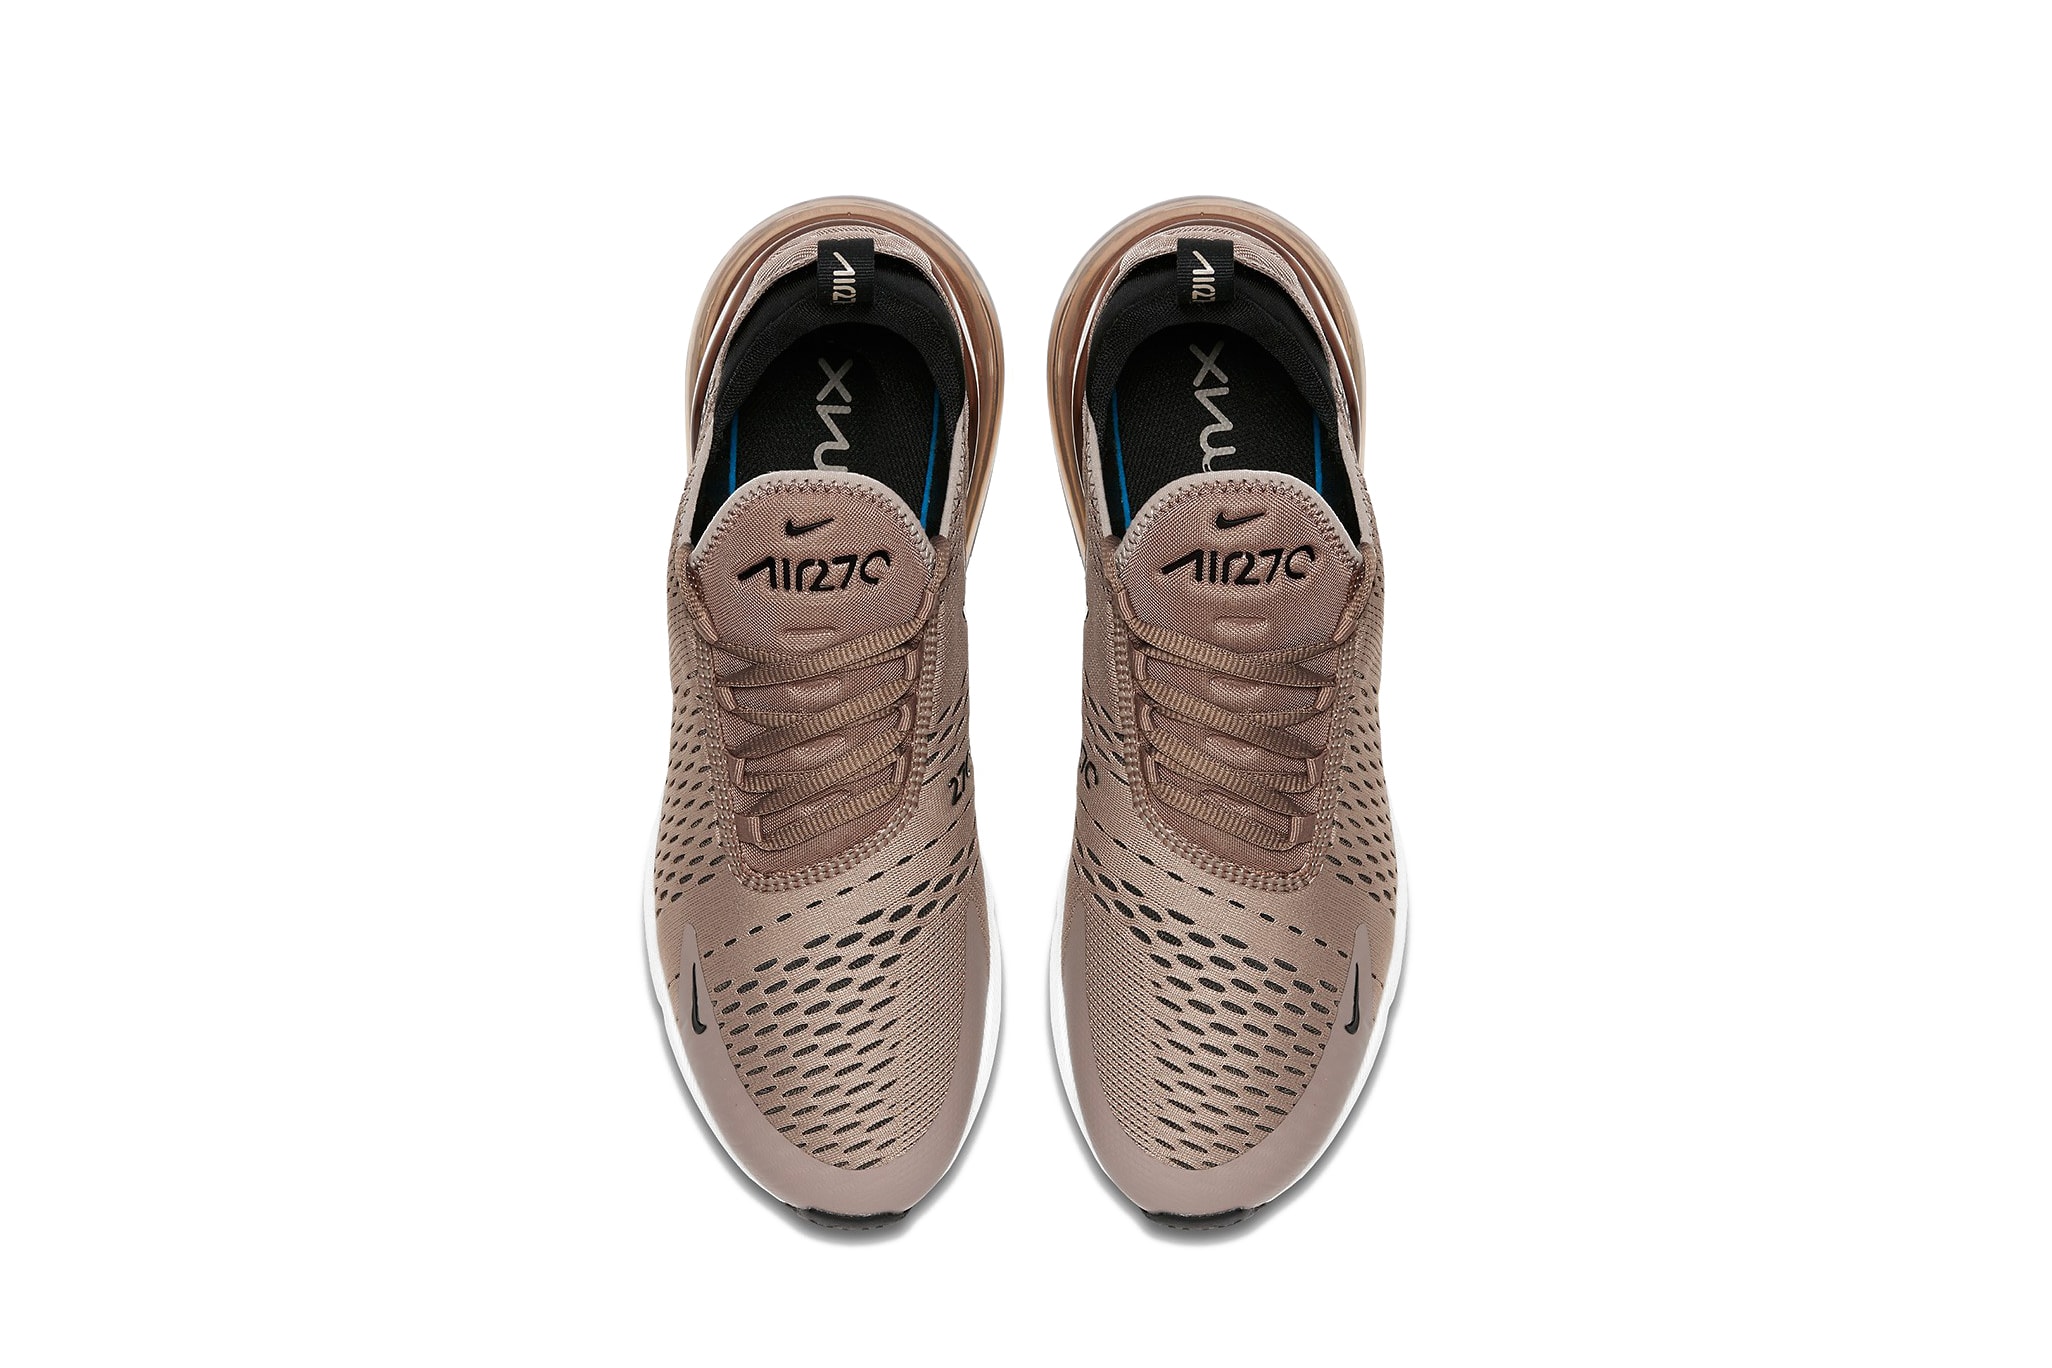 Nike Air Max 270 "Tan" Colorway Shoe Sneaker 270 Air Unit Swoosh Breathable Beige Earthy Earth Brown Bronze Nude